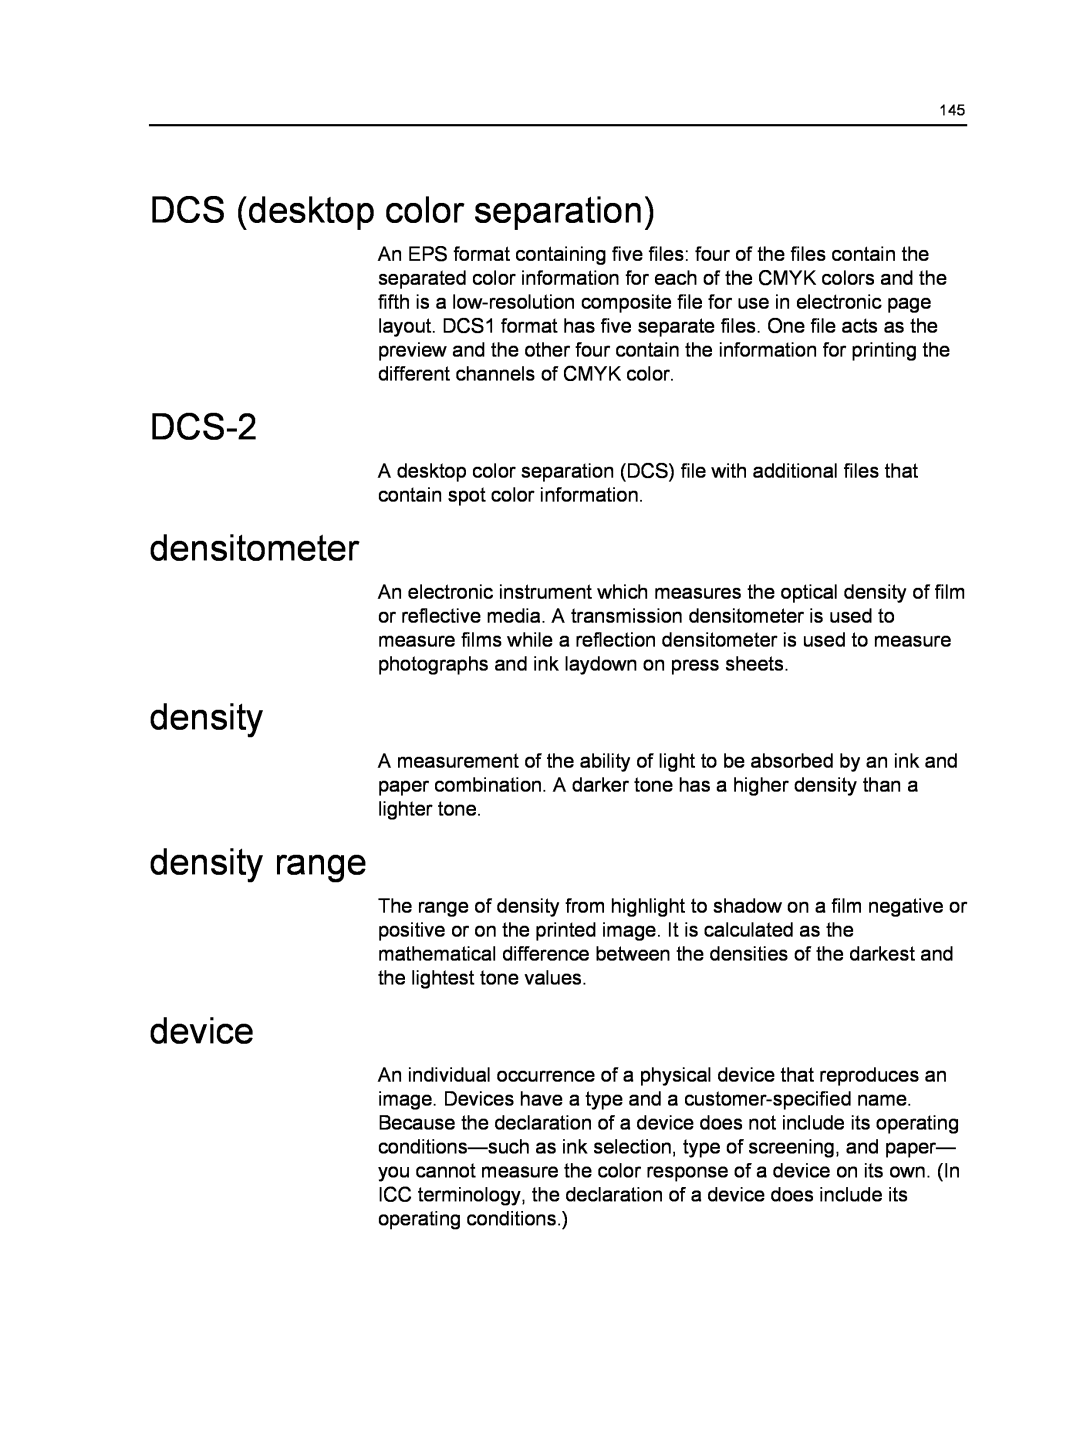 Xerox 550, 560 manual DCS desktop color separation, DCS-2, densitometer, density range, device 